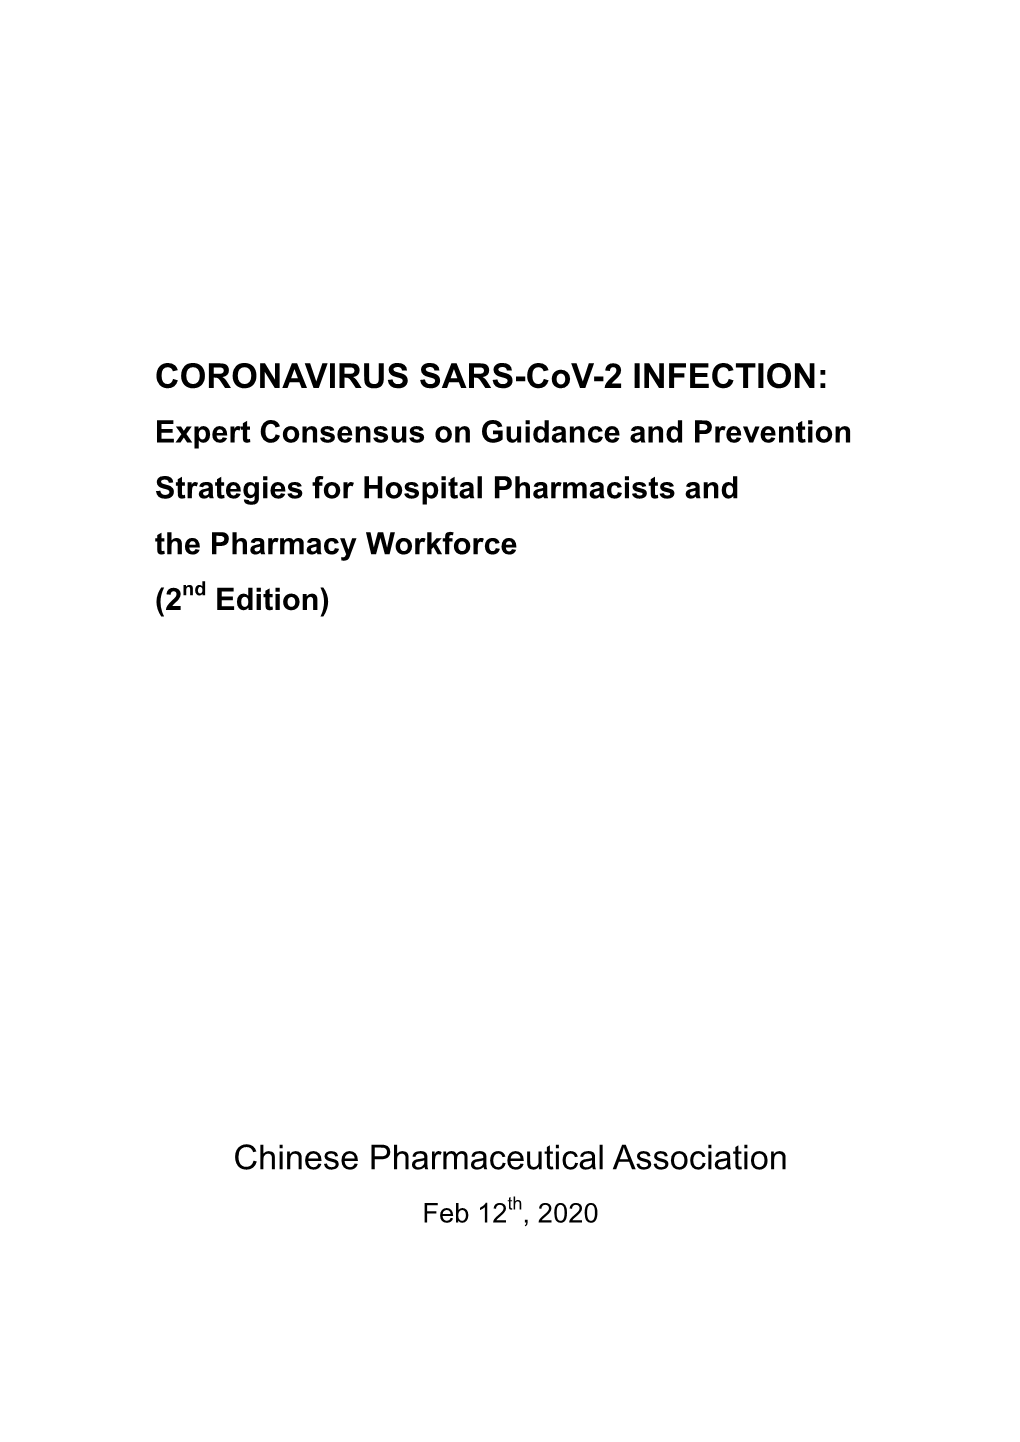 CORONAVIRUS SARS-Cov-2 INFECTION: Chinese Pharmaceutical Association